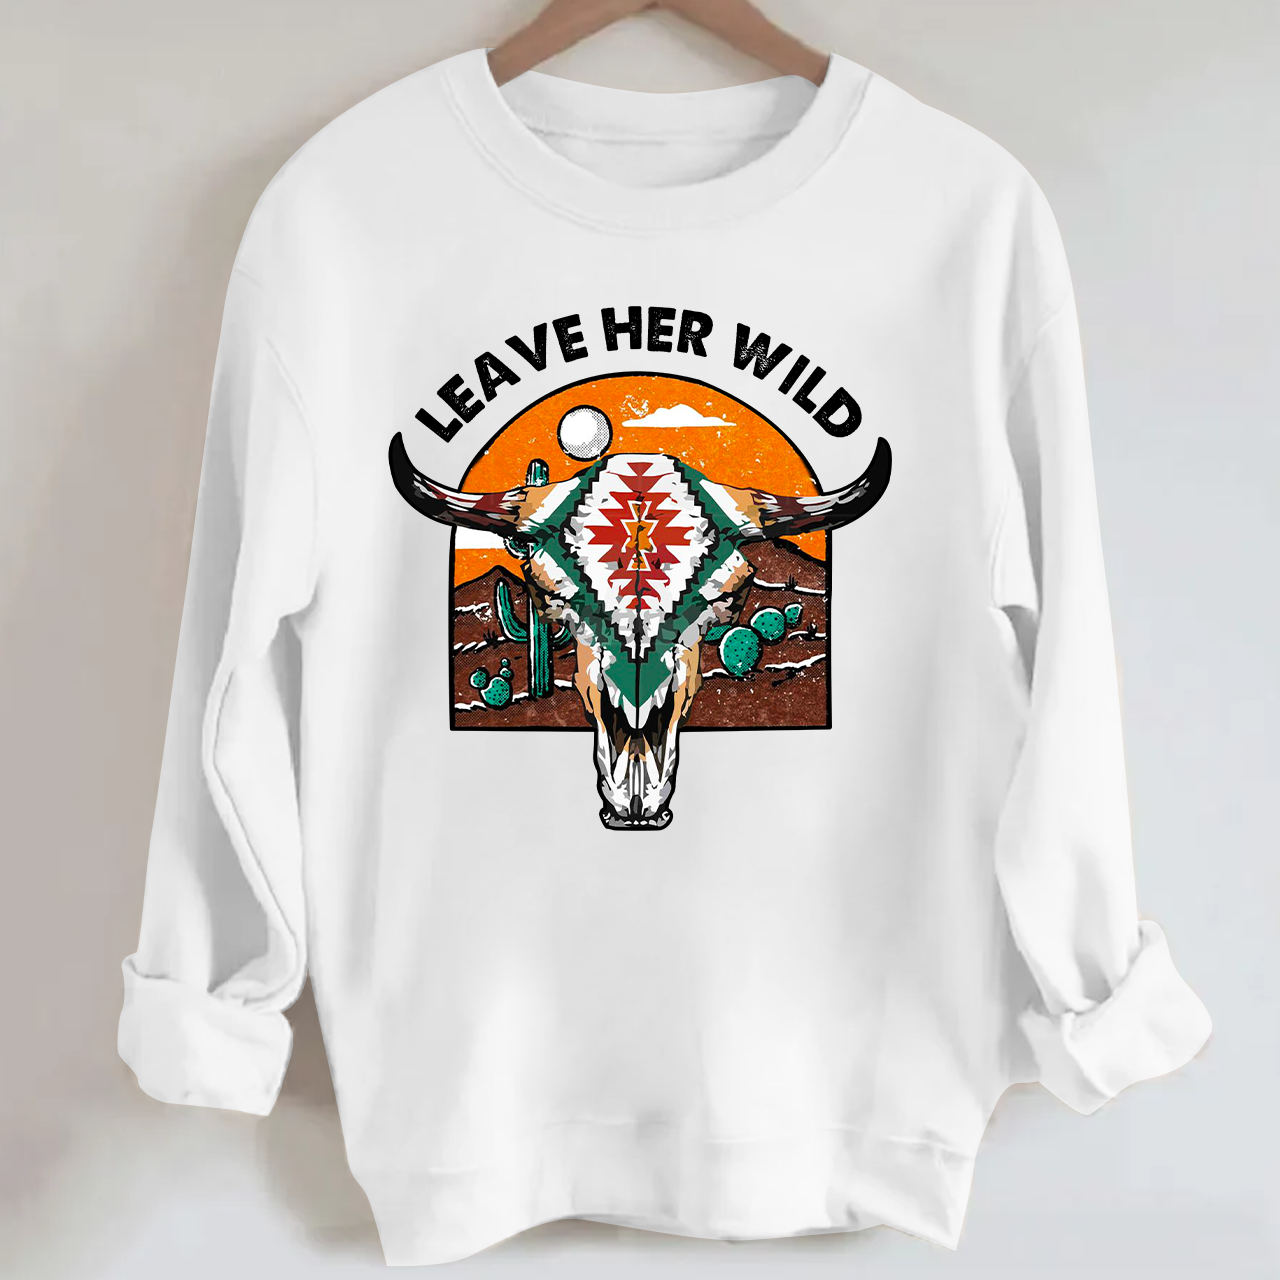 Leave Her Wild Cowboy Sweatshirt